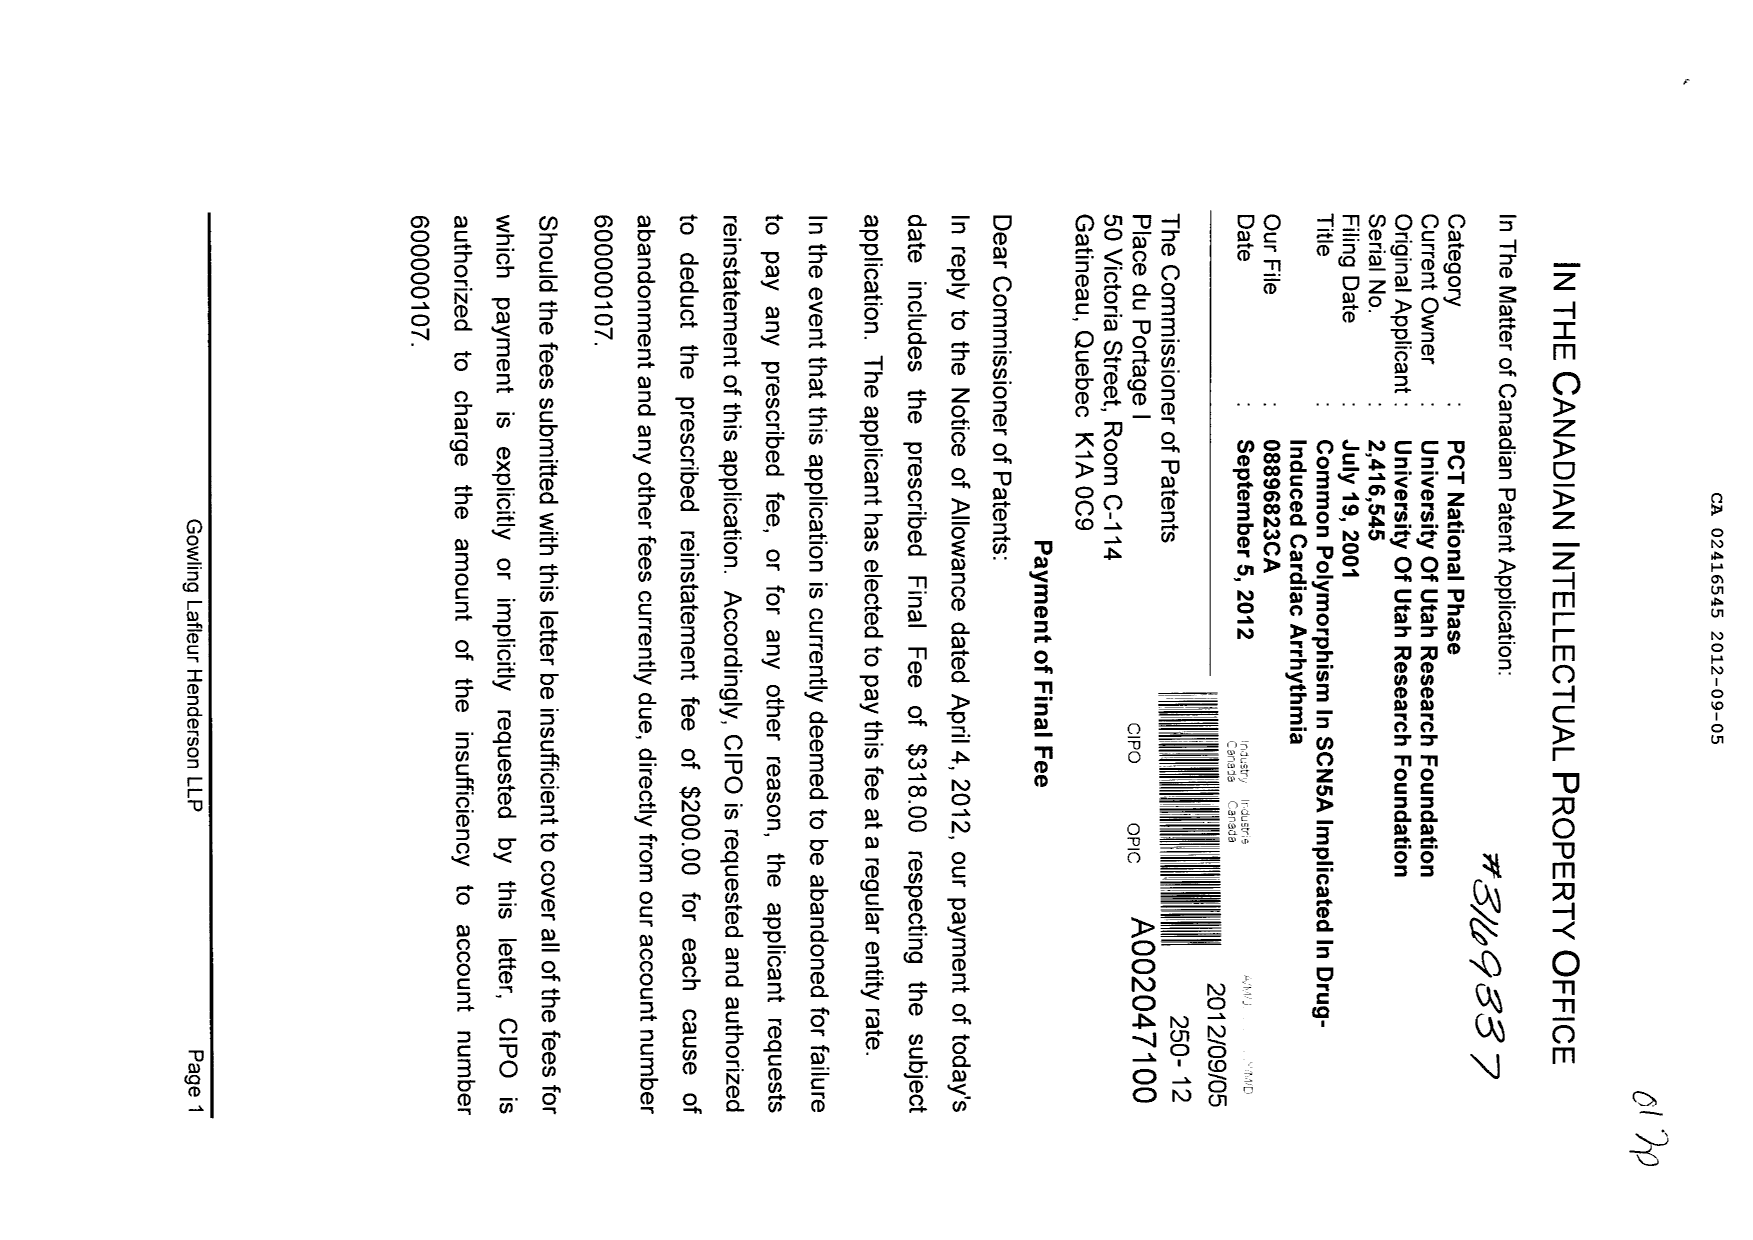 Canadian Patent Document 2416545. Correspondence 20111205. Image 1 of 2